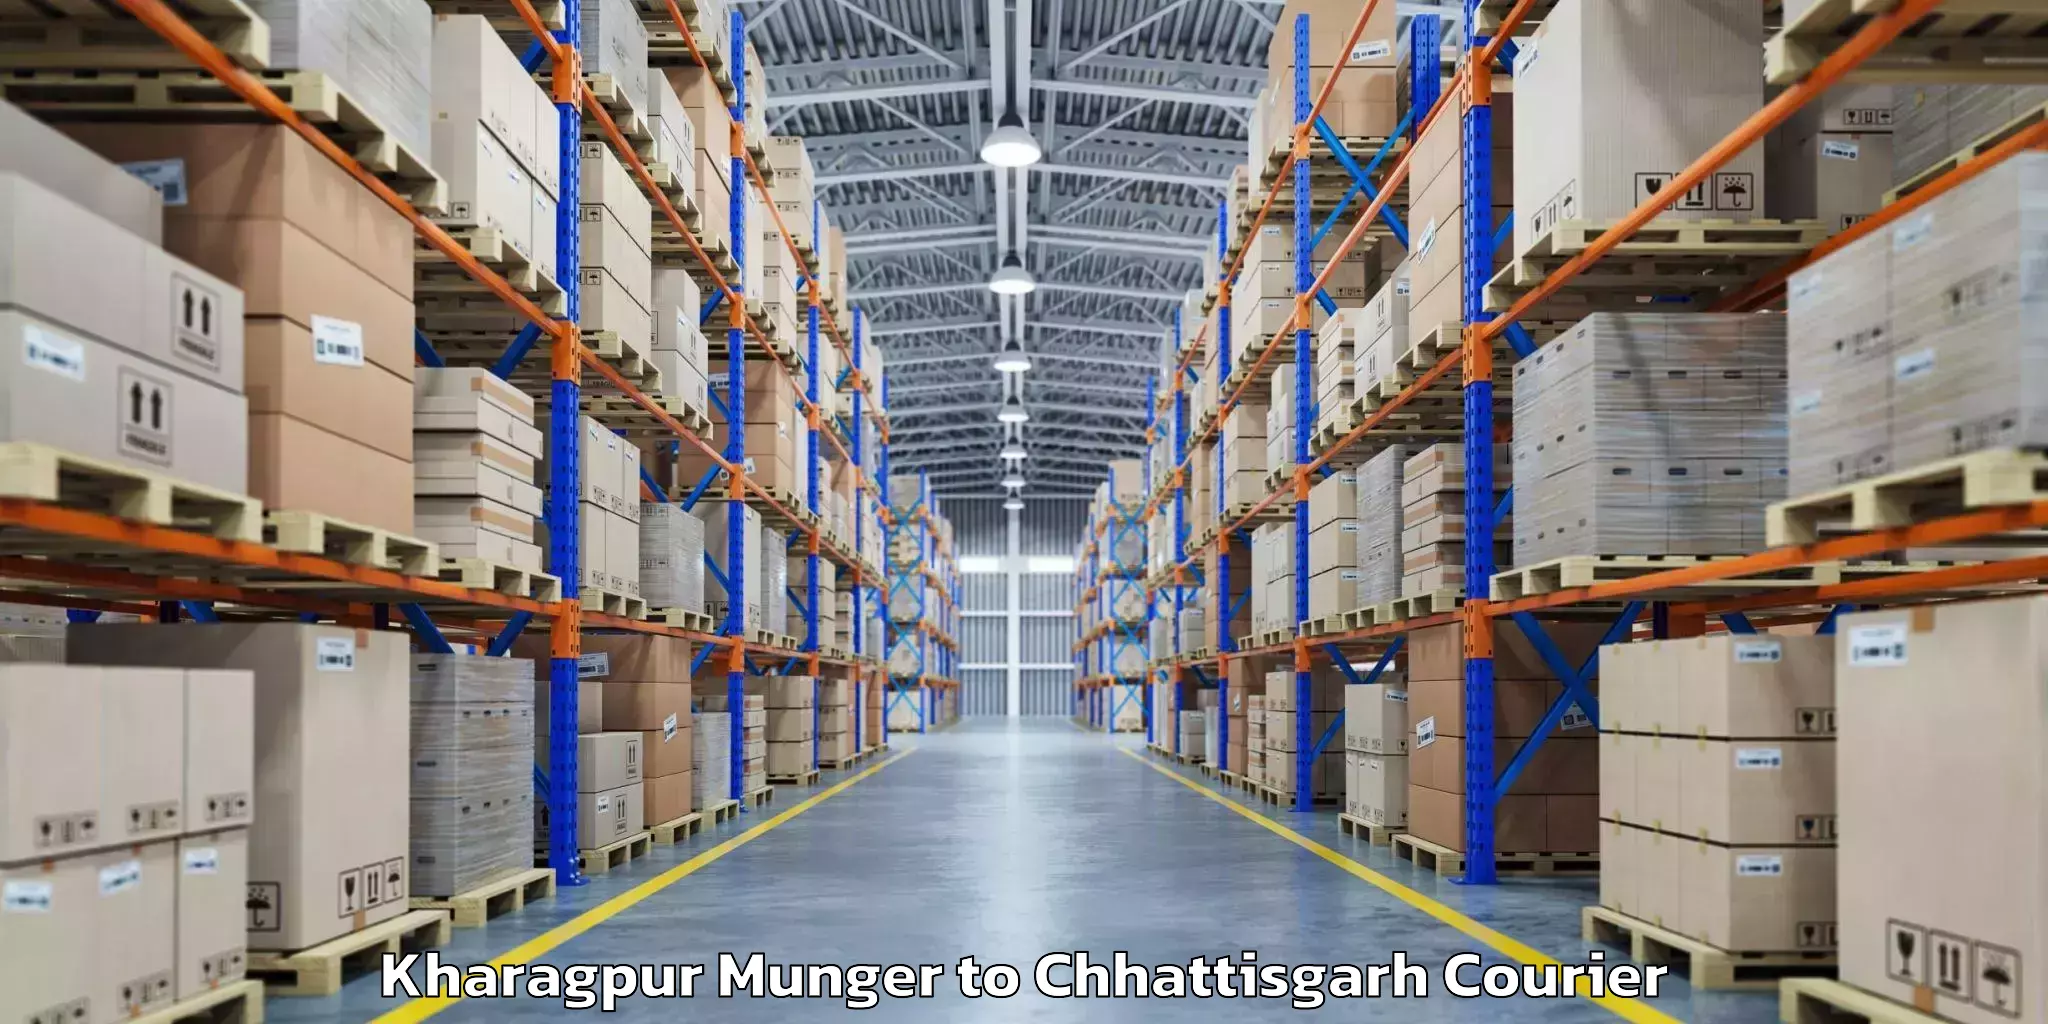 Baggage transport management in Kharagpur Munger to Chhattisgarh